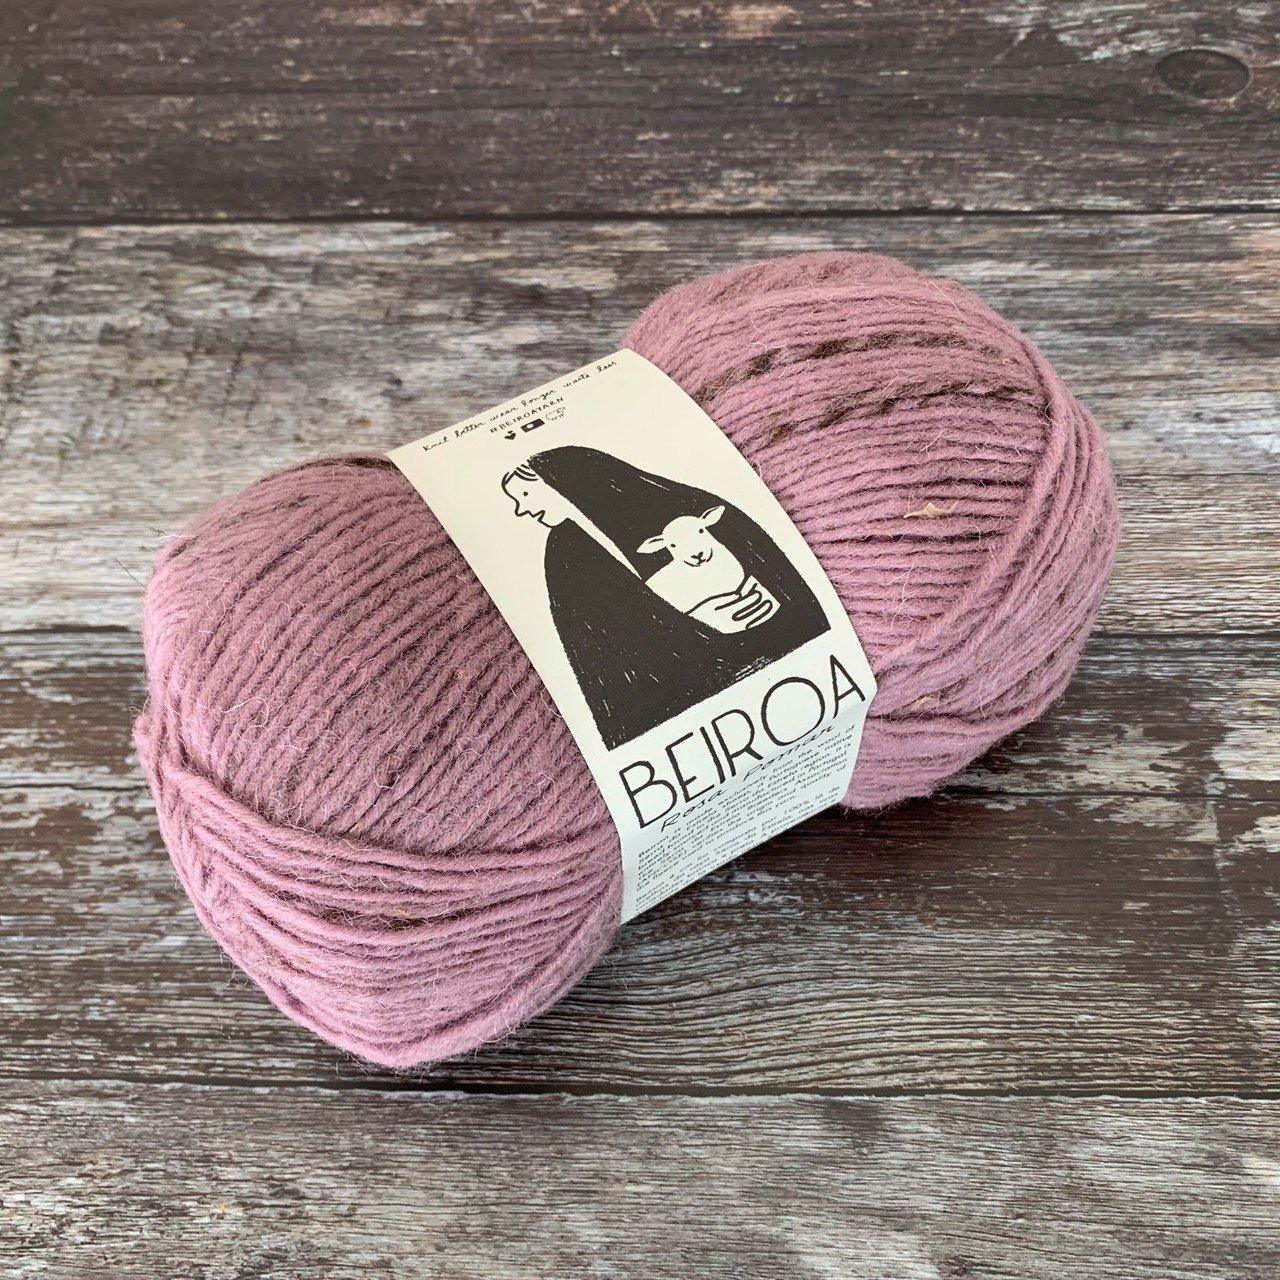 Retrosaria Retrosaria Beiroa - 734 - Worsted Knitting Yarn